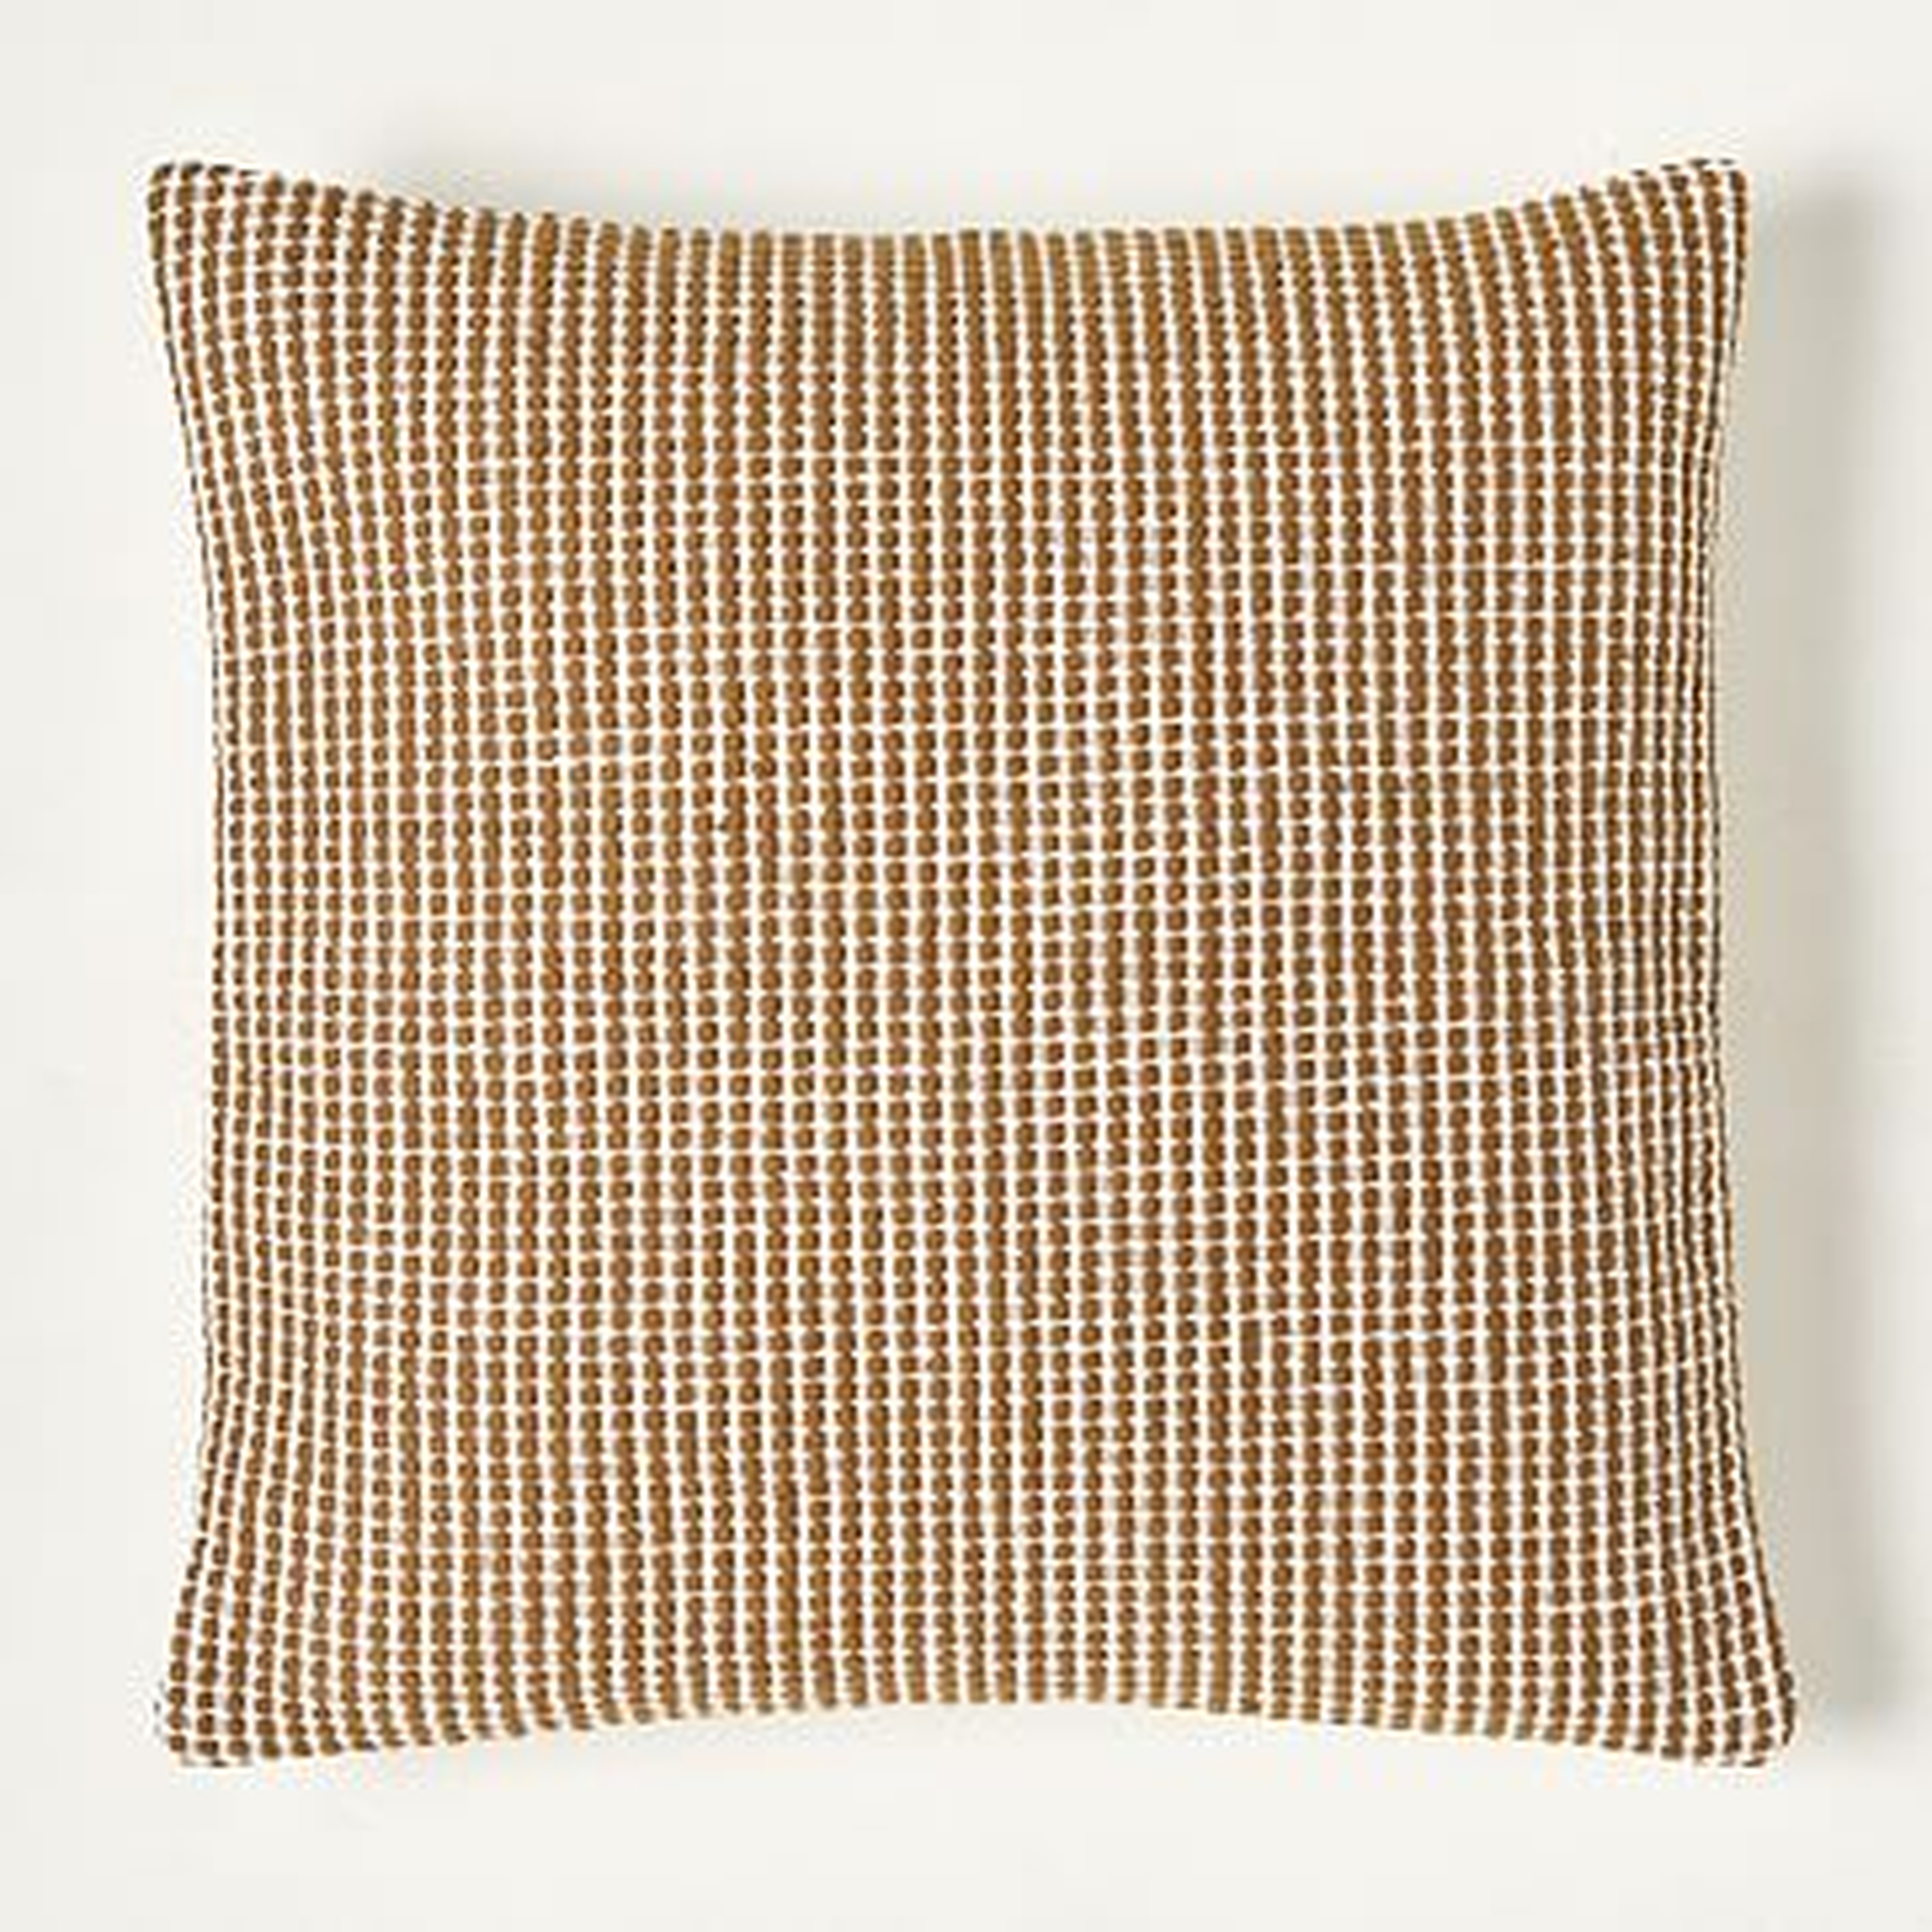 Textured Dimple Dot Pillow Cover, 20"x20", Bronze Brown - West Elm